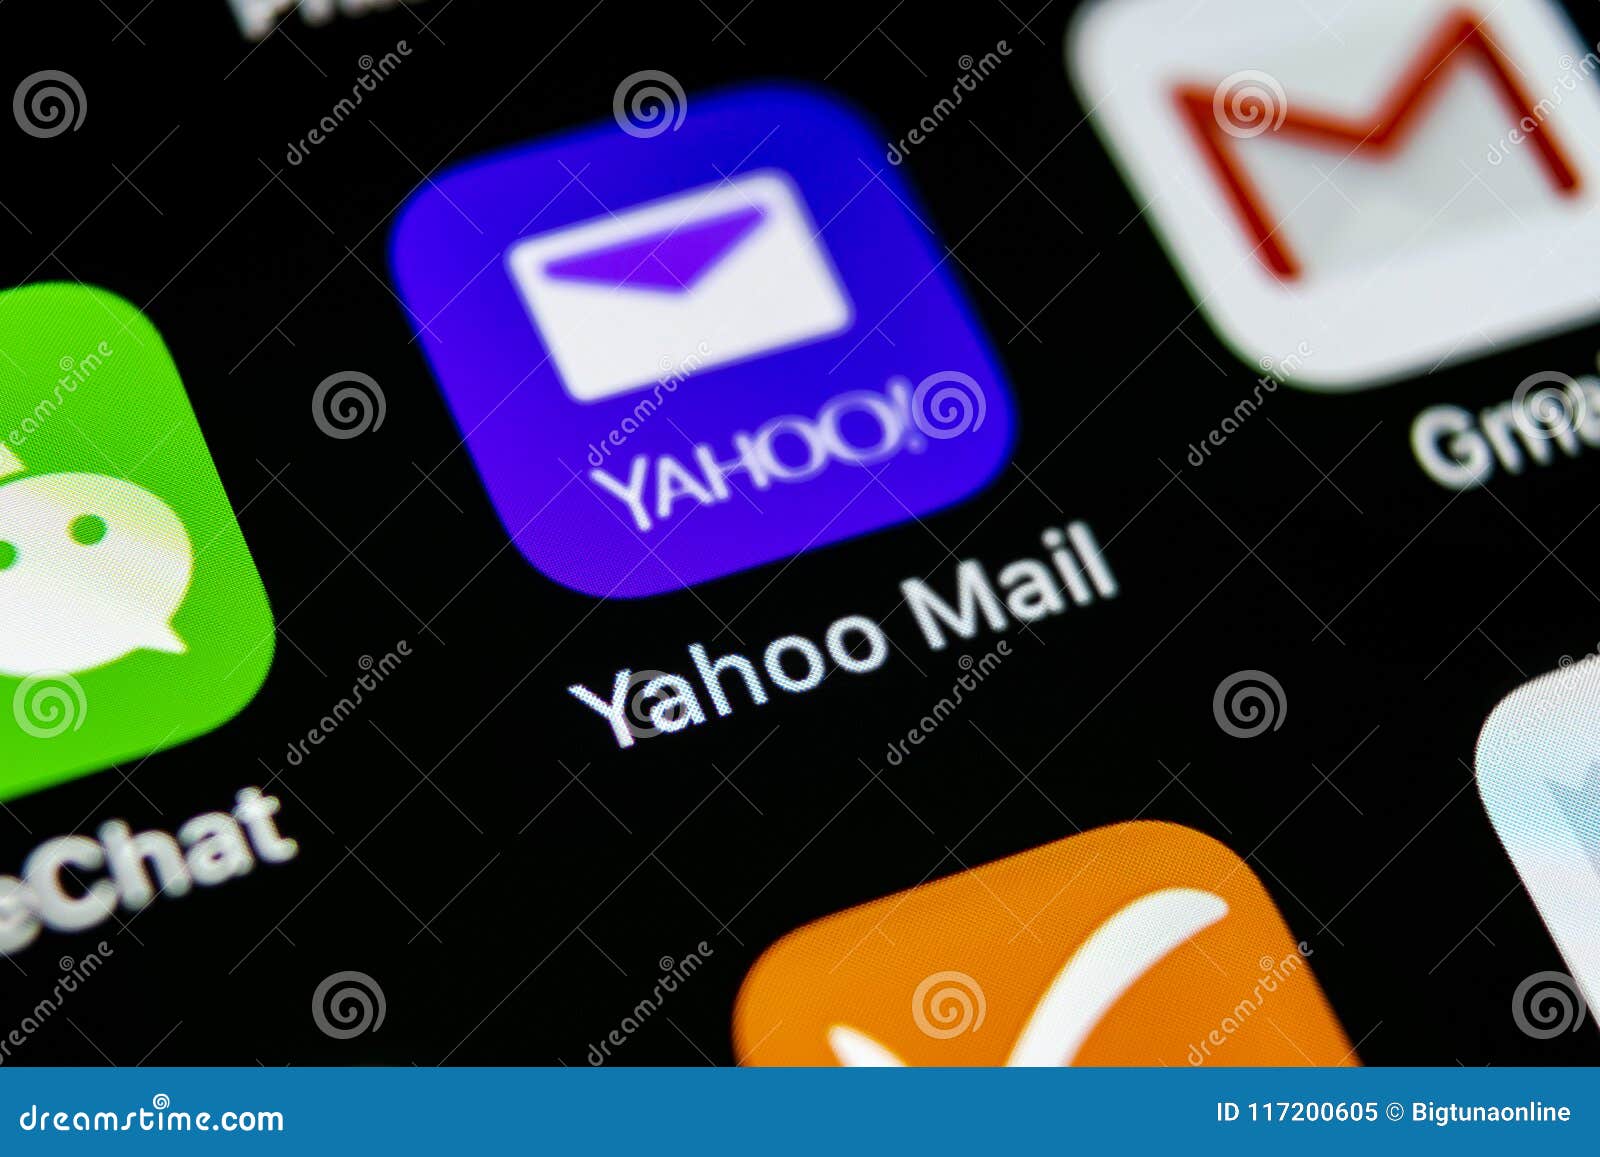 Chat sign up yahoo Yahoo ist